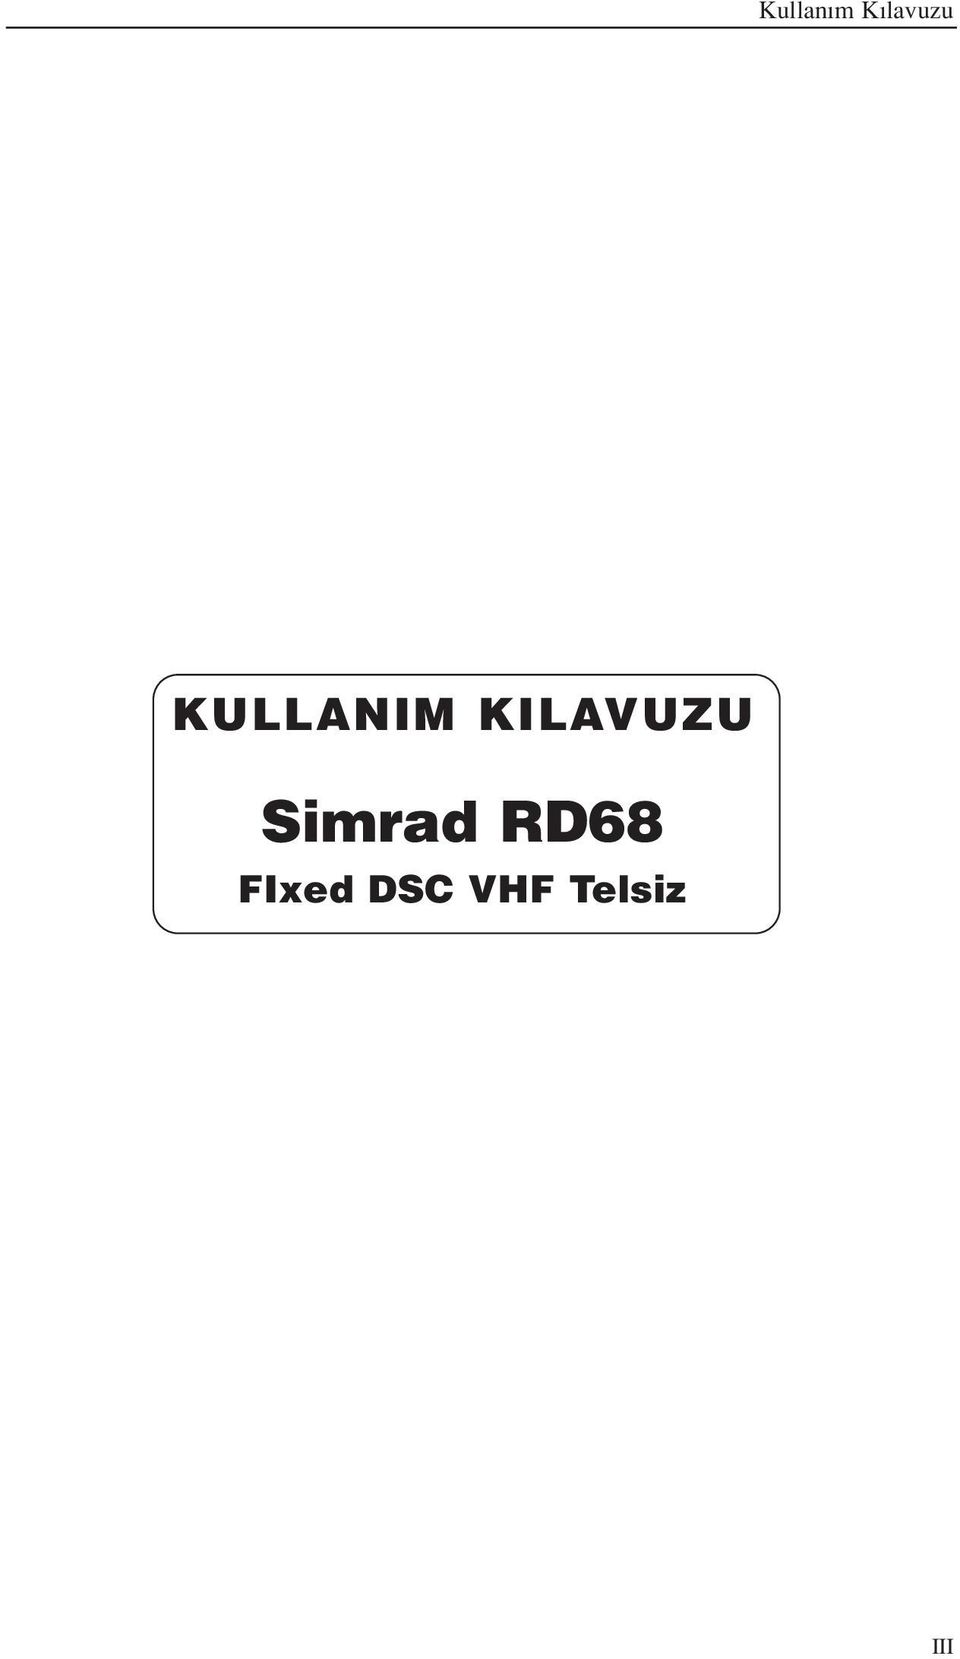 Simrad RD68 FIxed